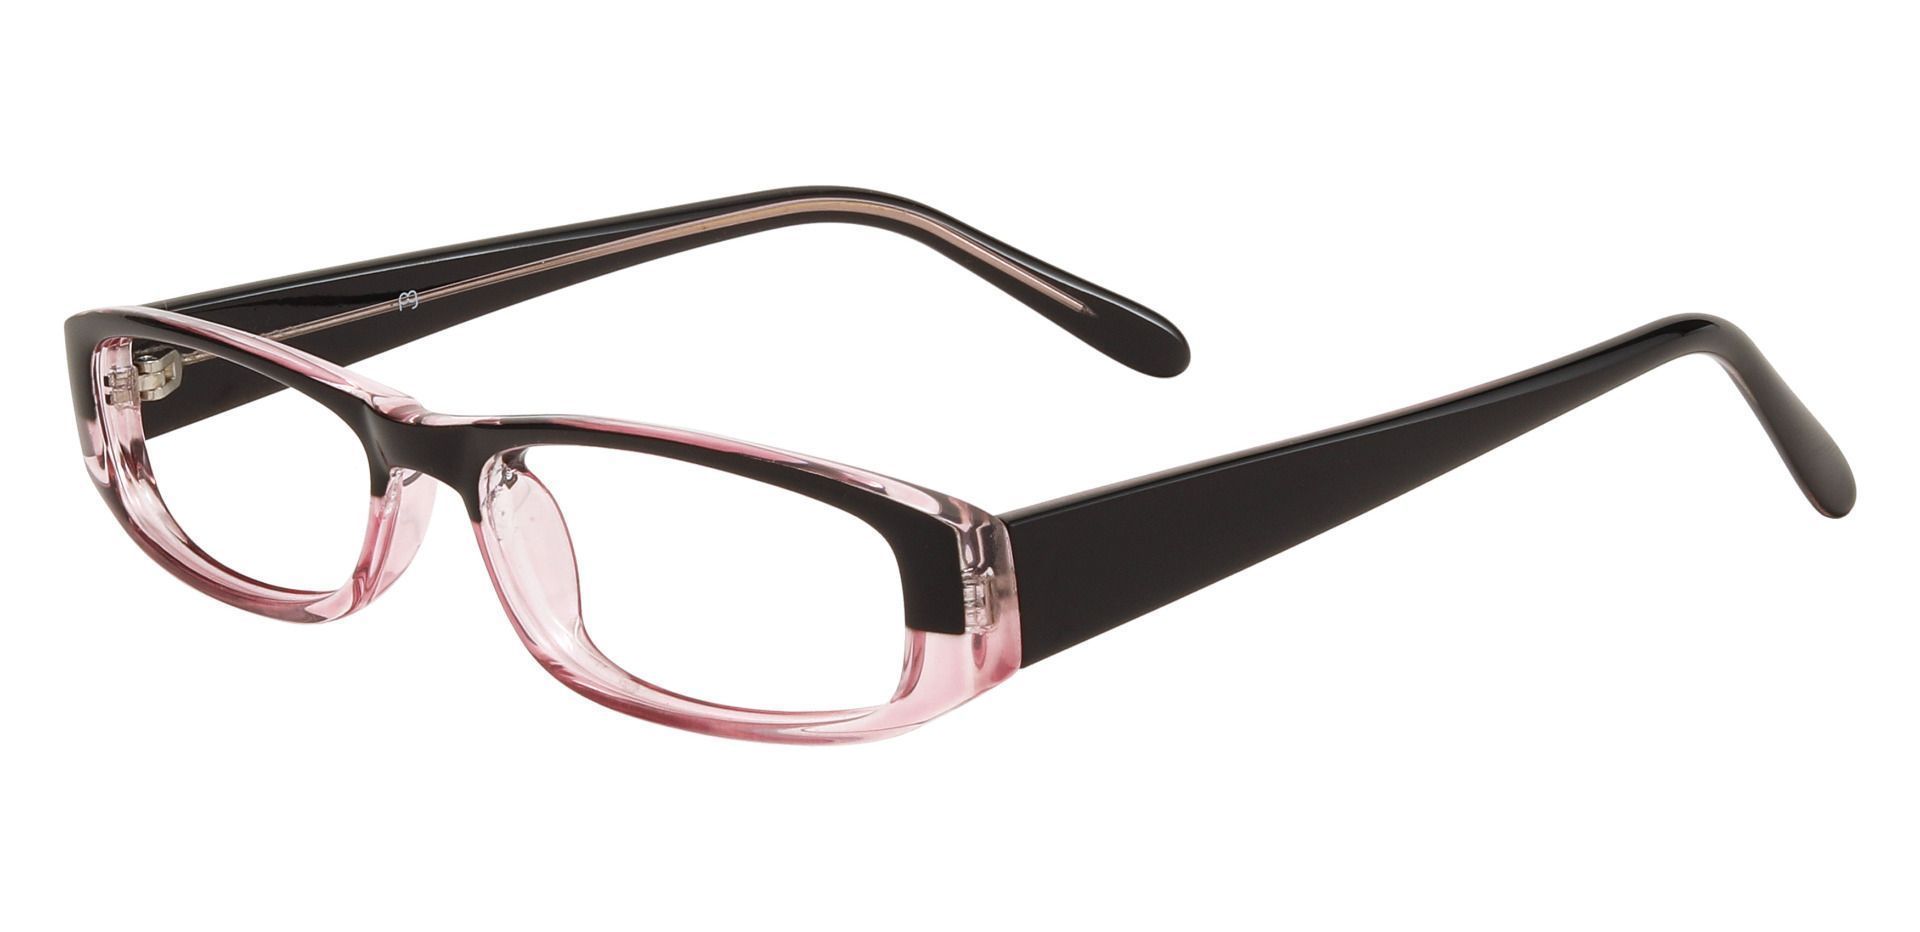 Elgin Rectangle Single Vision Glasses - Pink